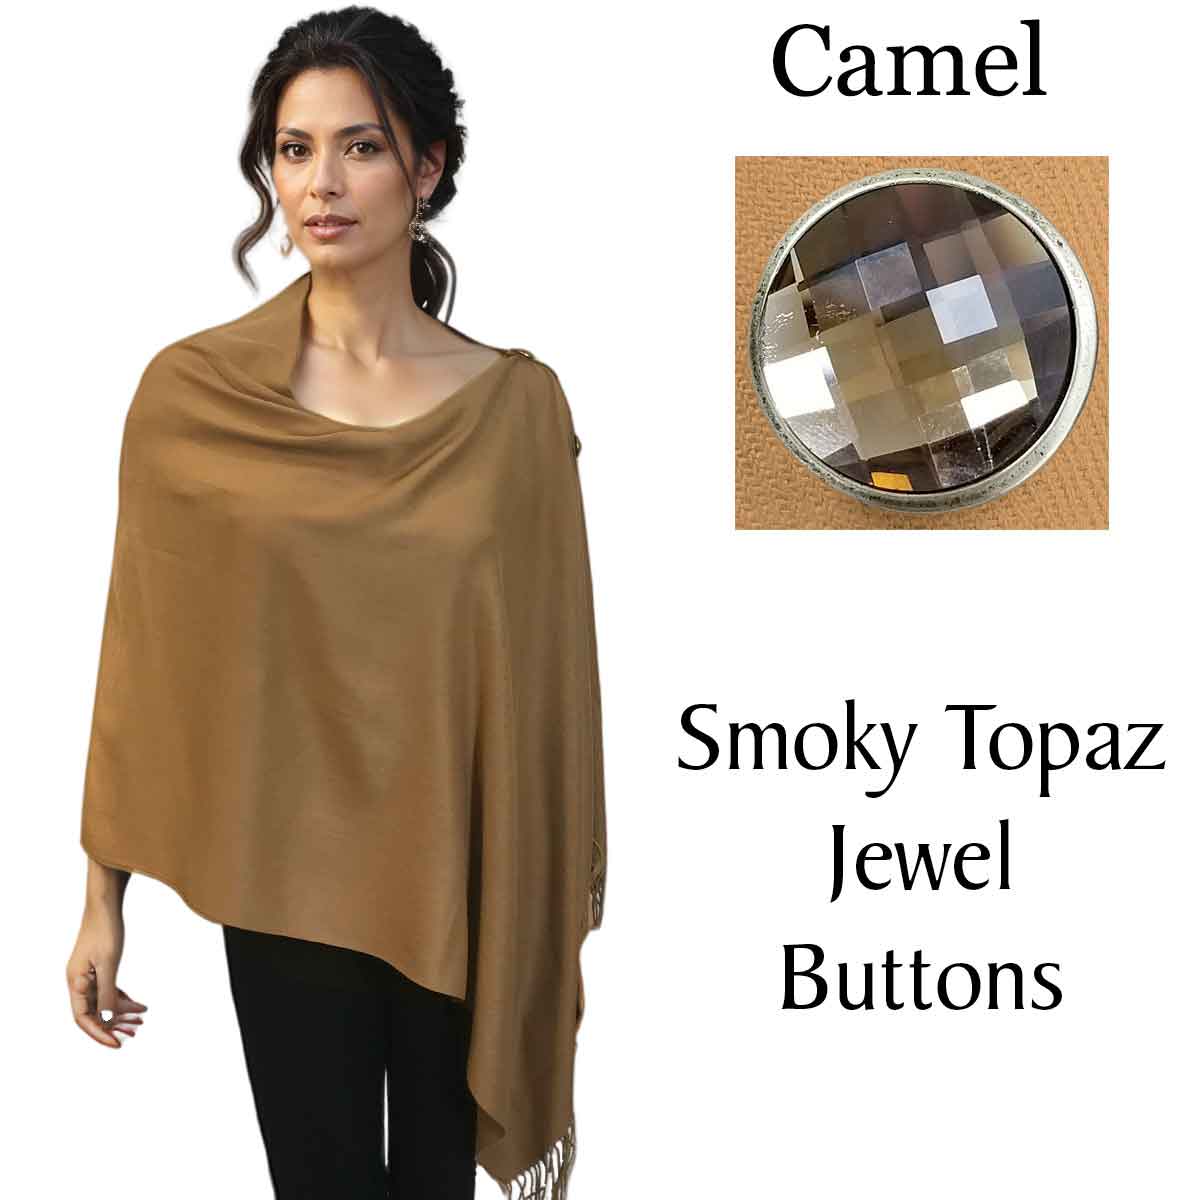 #28 Camel with Smoky Topaz Jewel Buttons